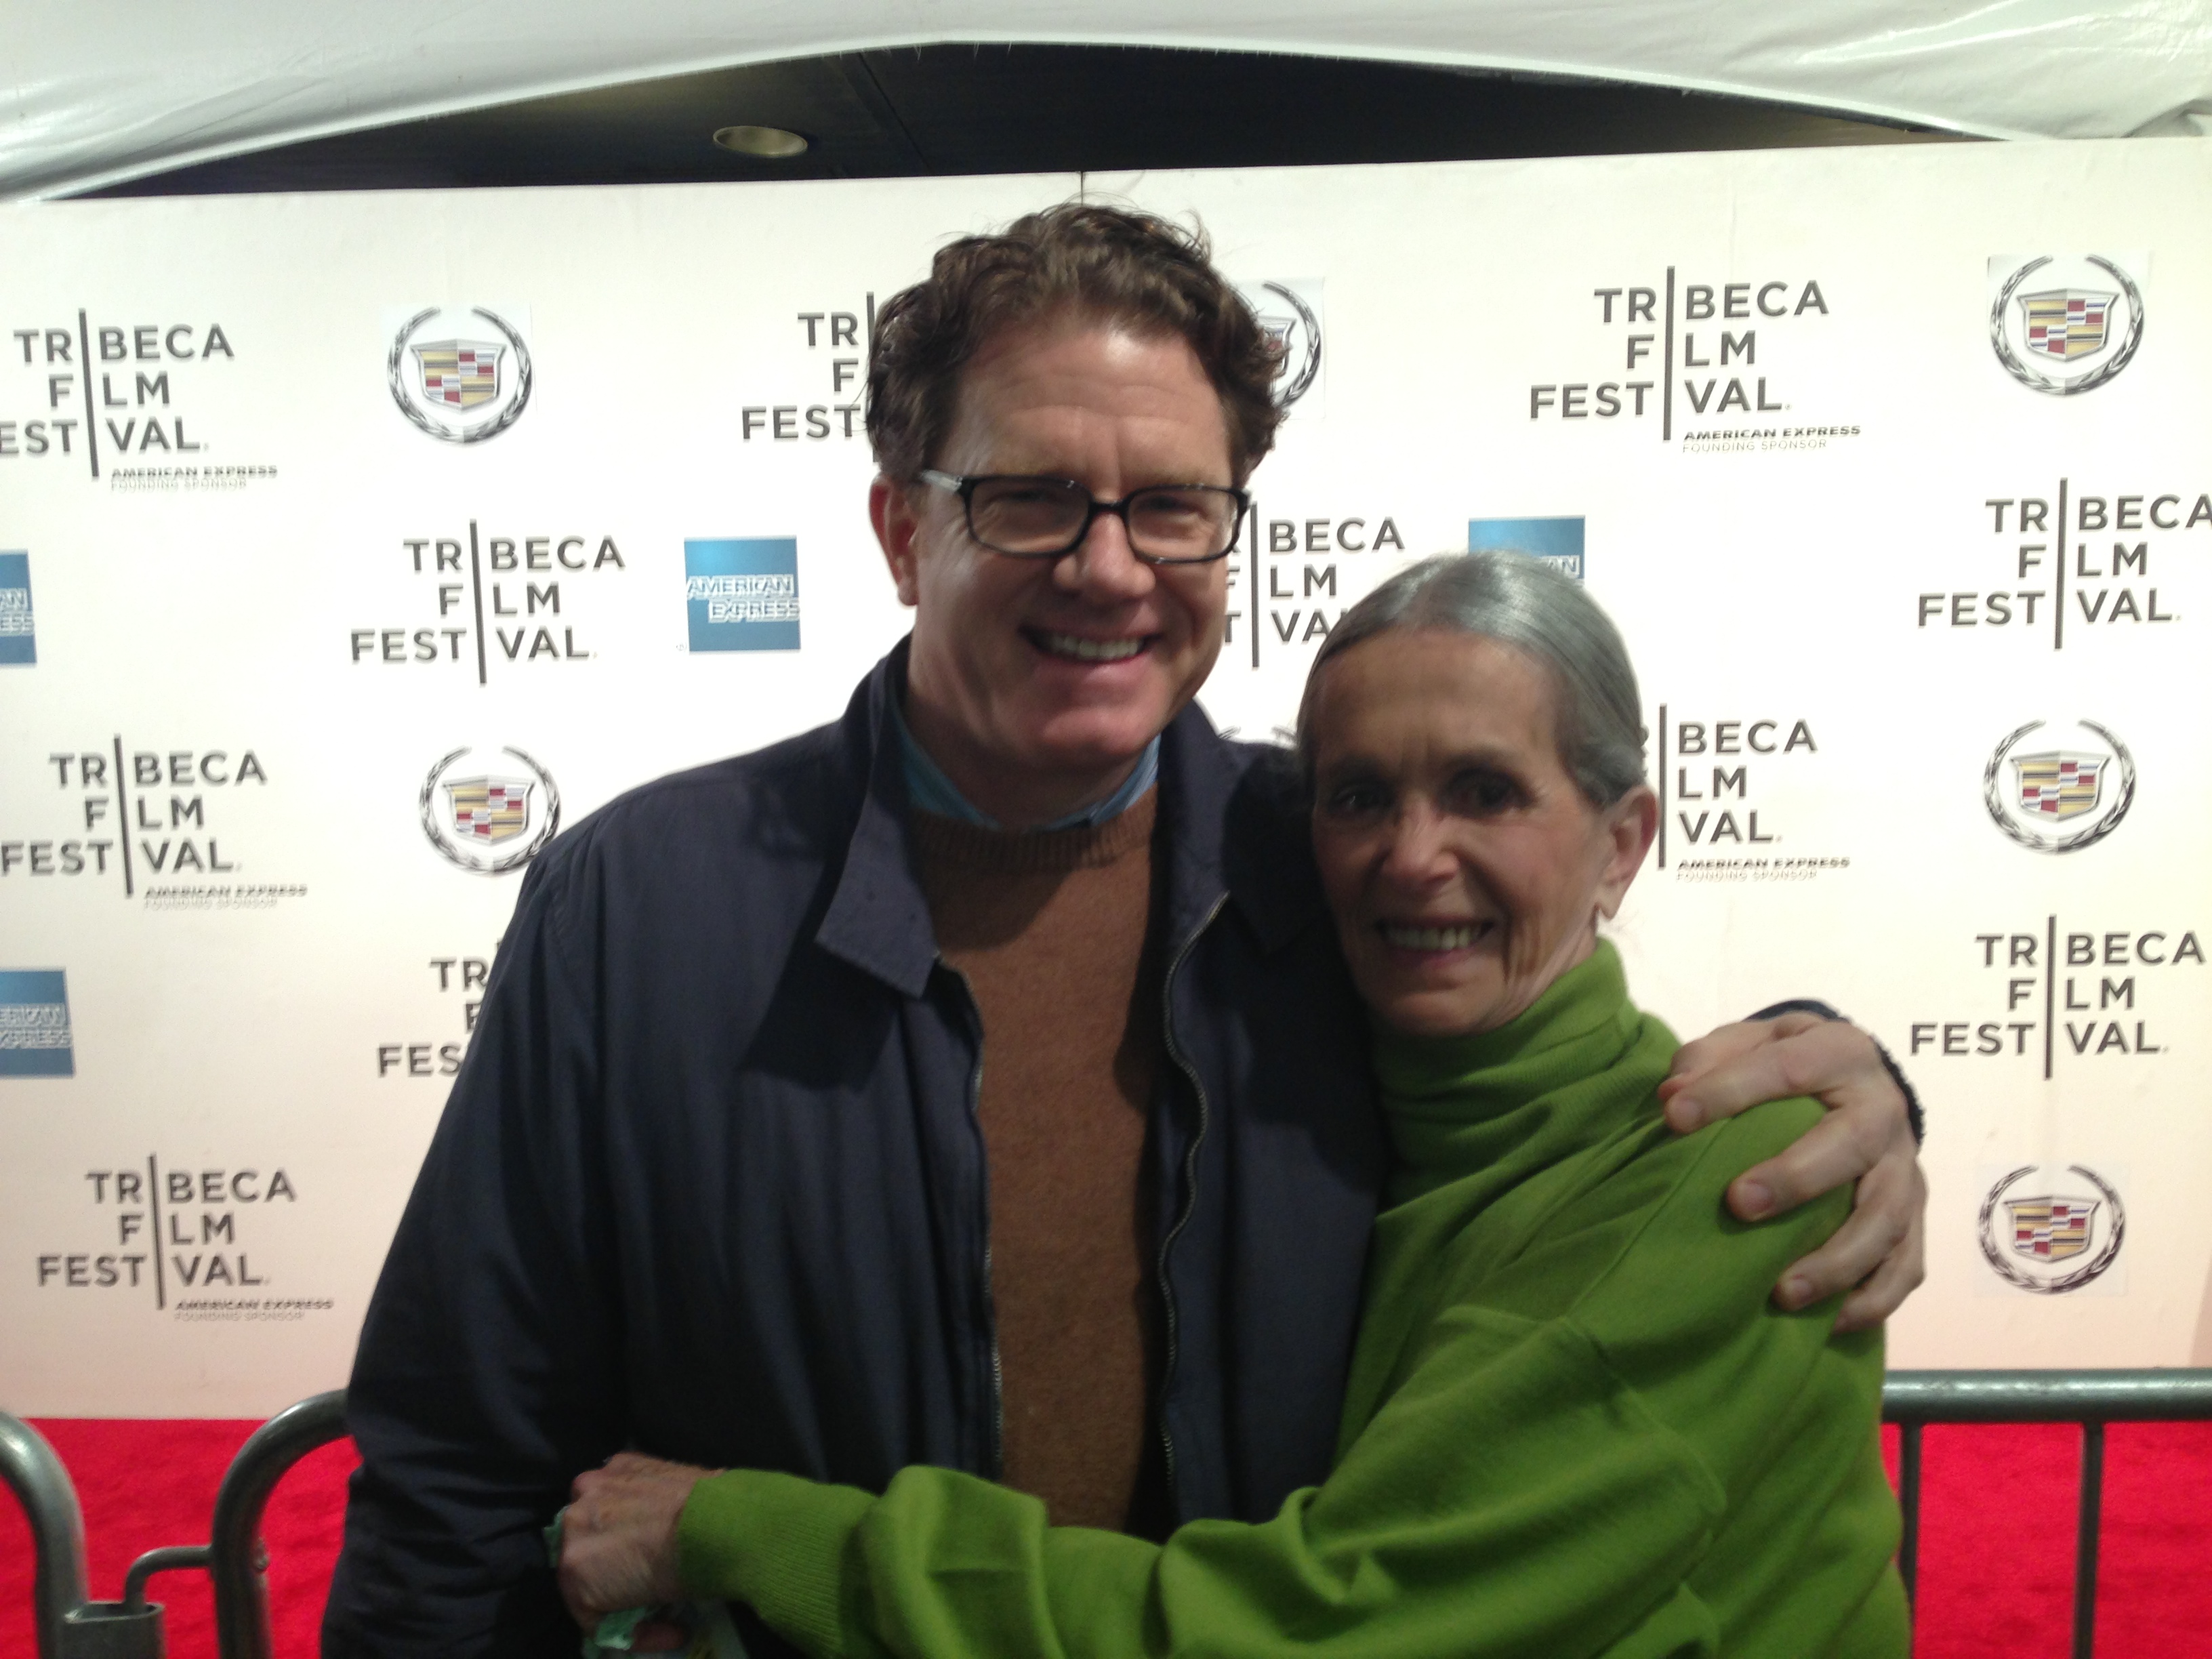 Tribeca Film Festival 2013 with Pat Squire